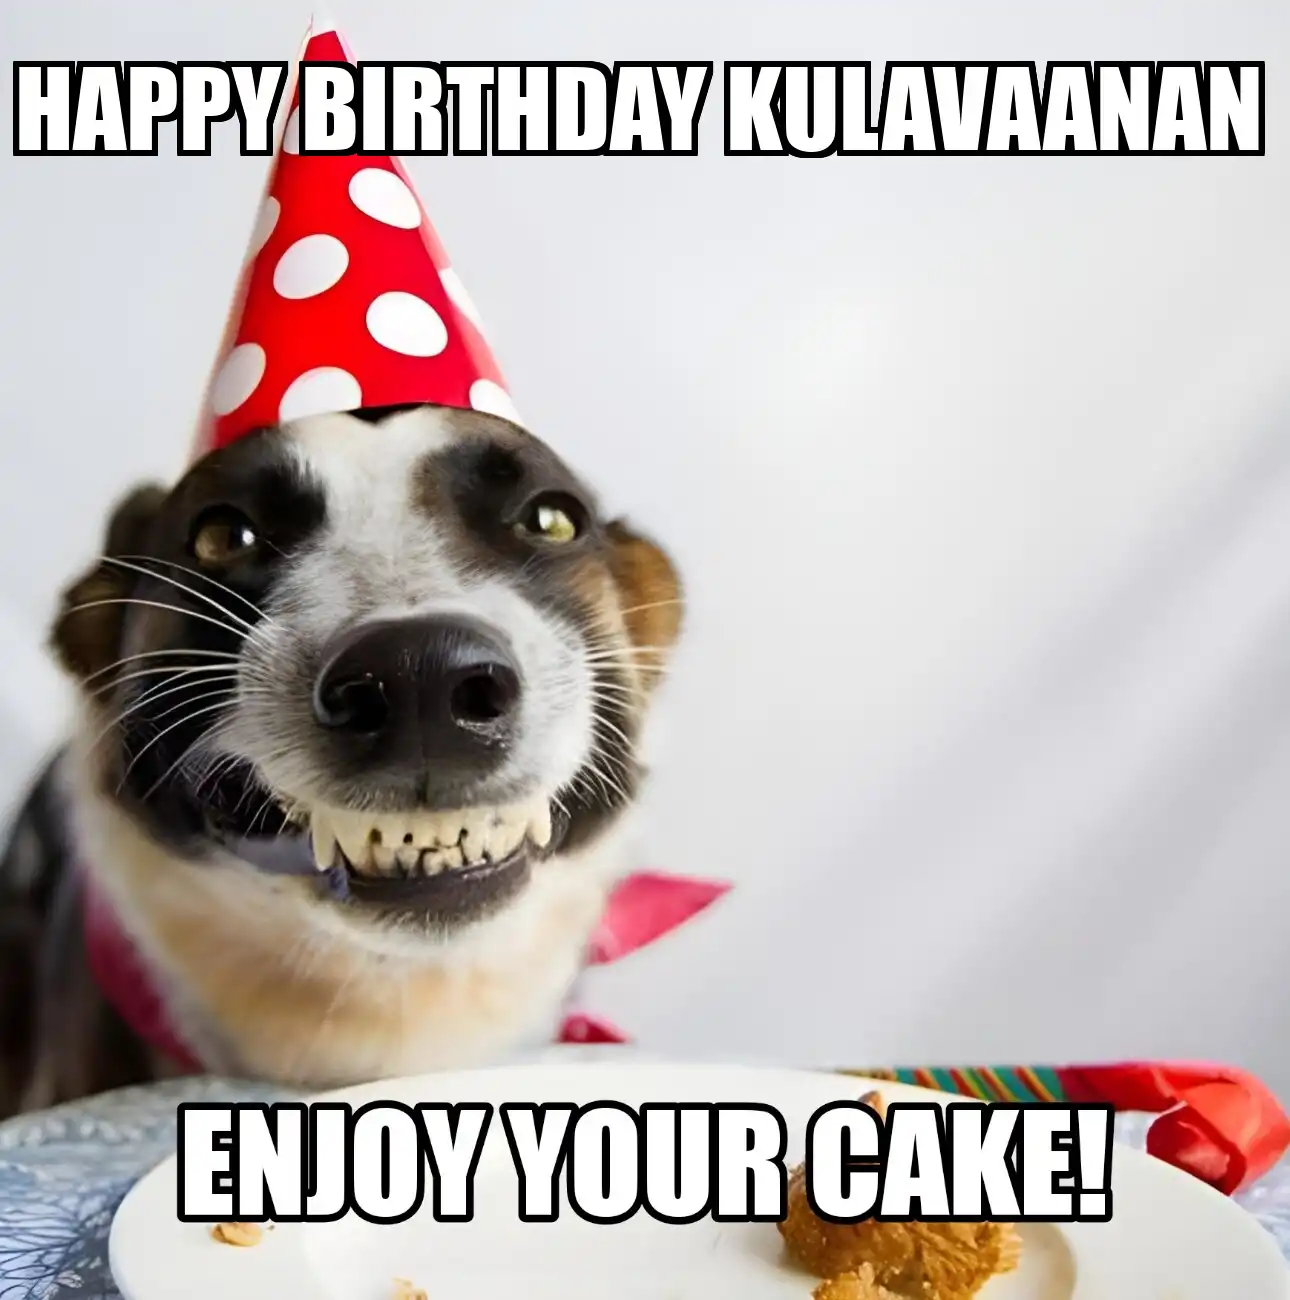 Happy Birthday Kulavaanan Enjoy Your Cake Dog Meme